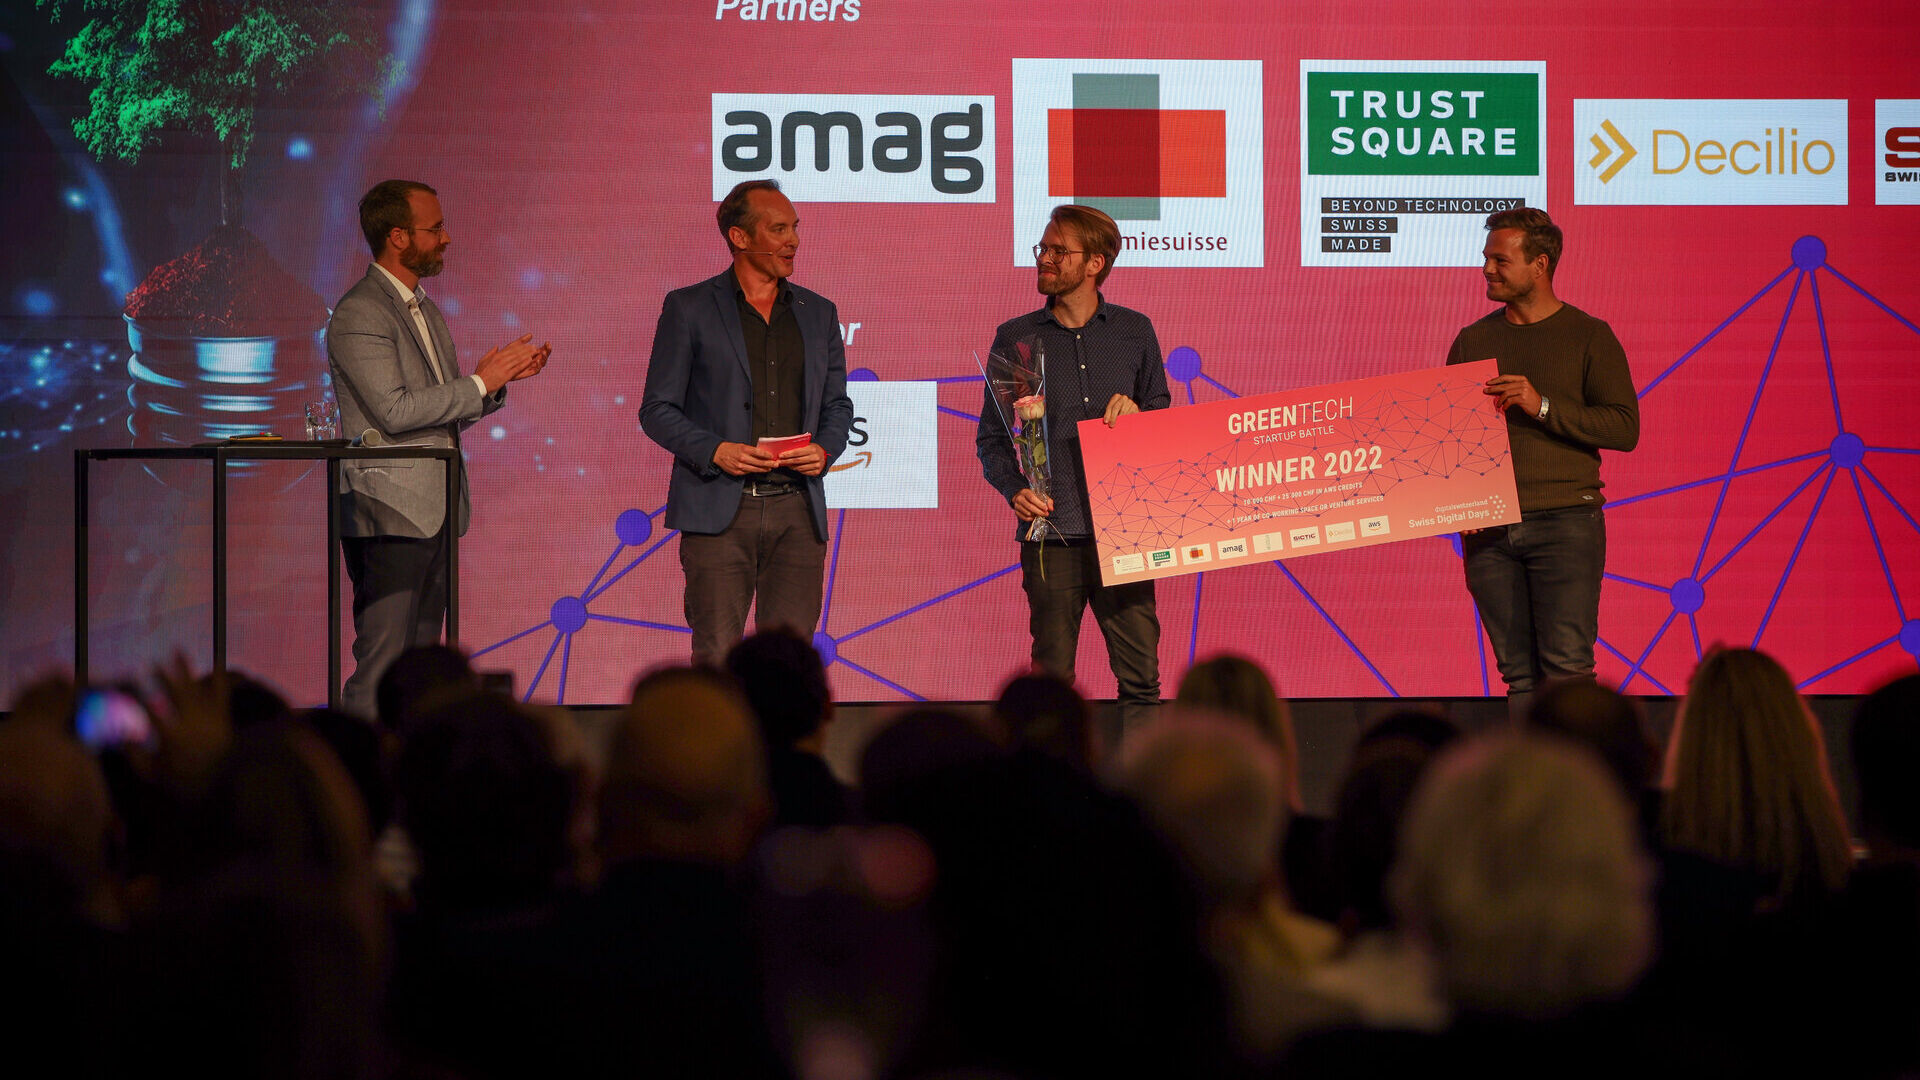 Swiss Digital Days: završni događaj "Swiss Digital Days" 2022. u Freiruumu u Zugu (Cug) 27. oktobra: ceremonija dodjele nagrada inicijative "Greentech Startup Battle" uz vibooovu pobjedu